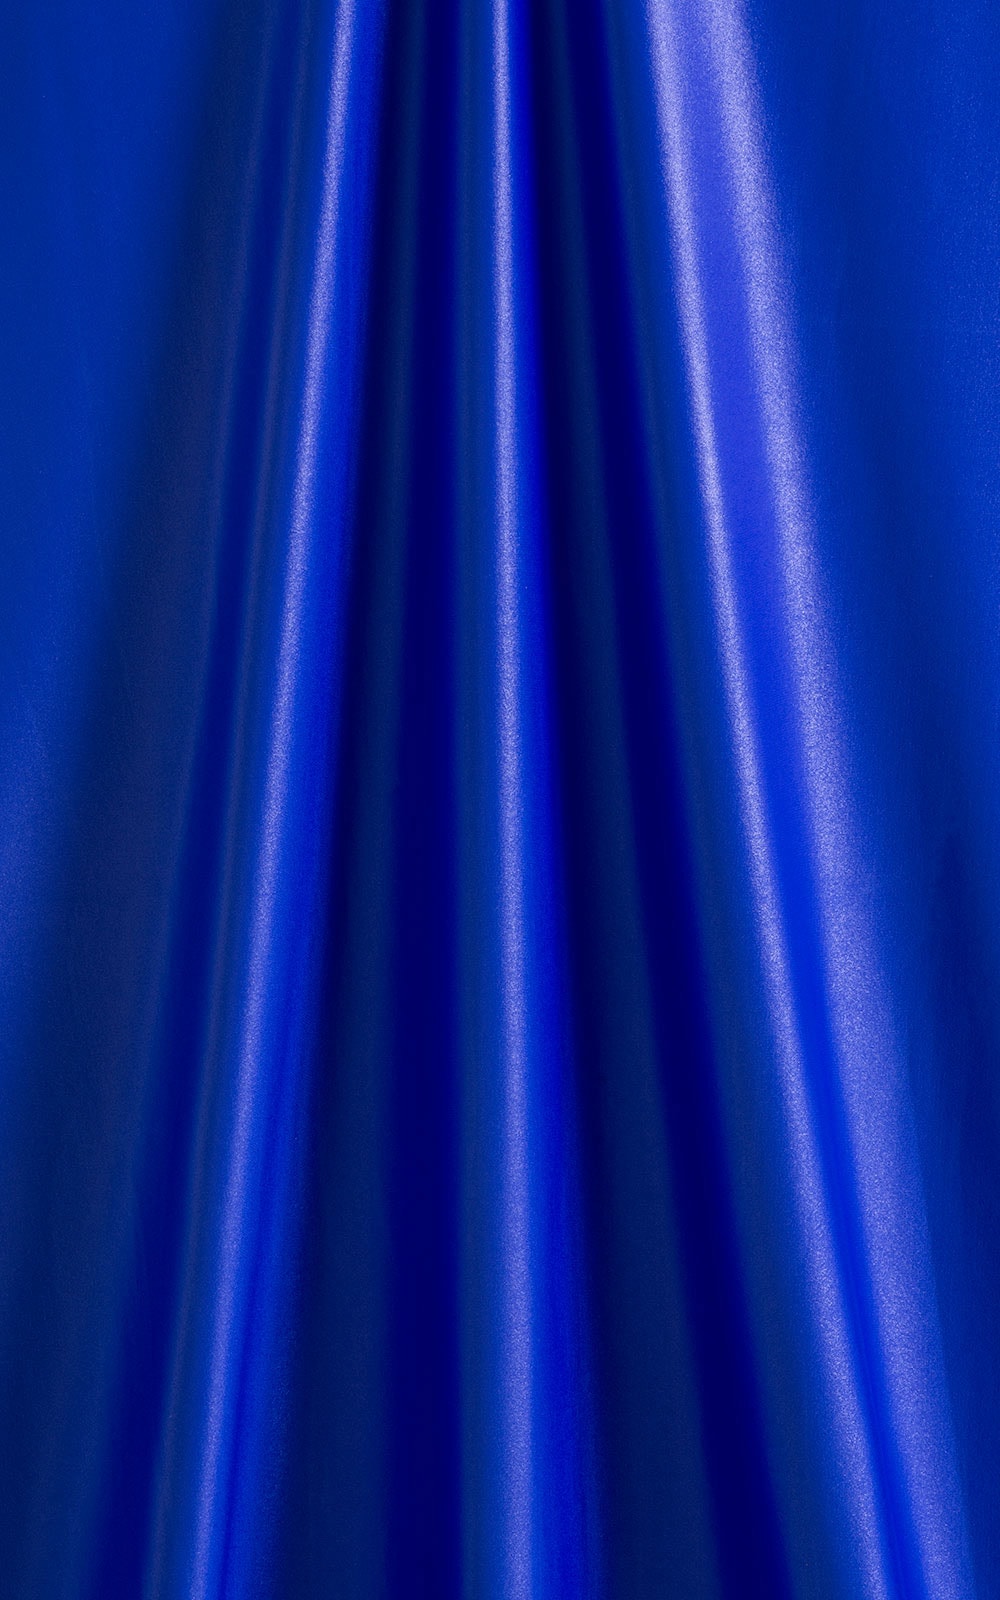 Lycra Bike Length Shorts in Wet Look Royal Blue Fabric